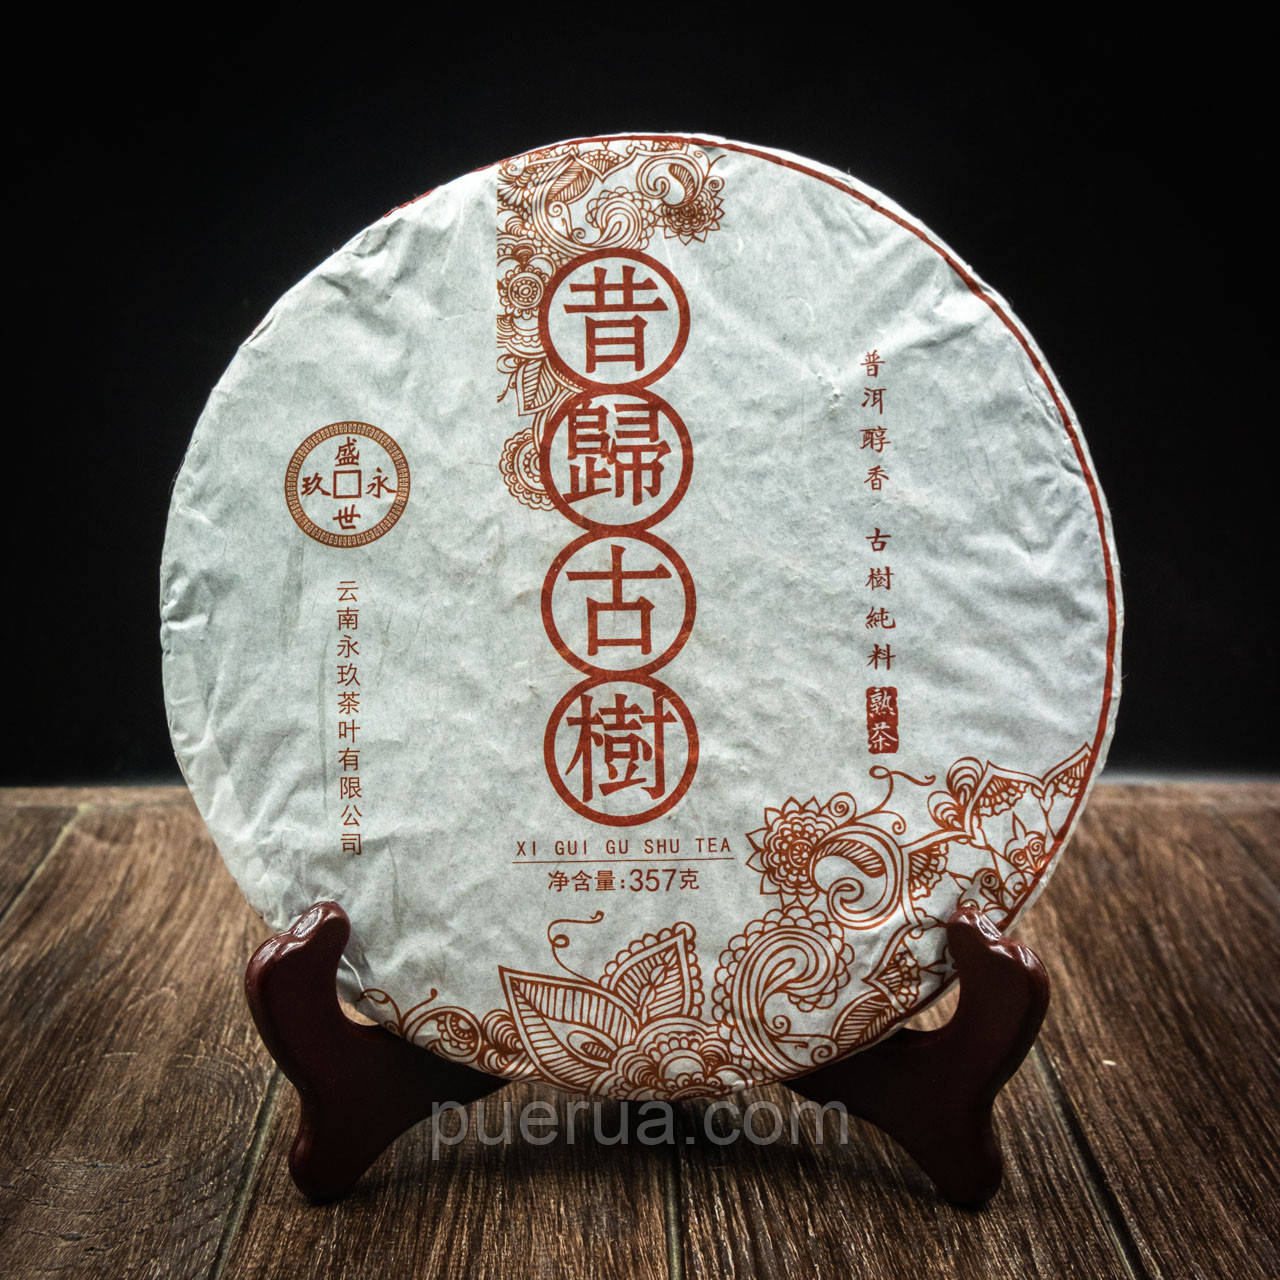 Шу пуер "Xi Gui Gu Shu" 357 грам 2015 рік